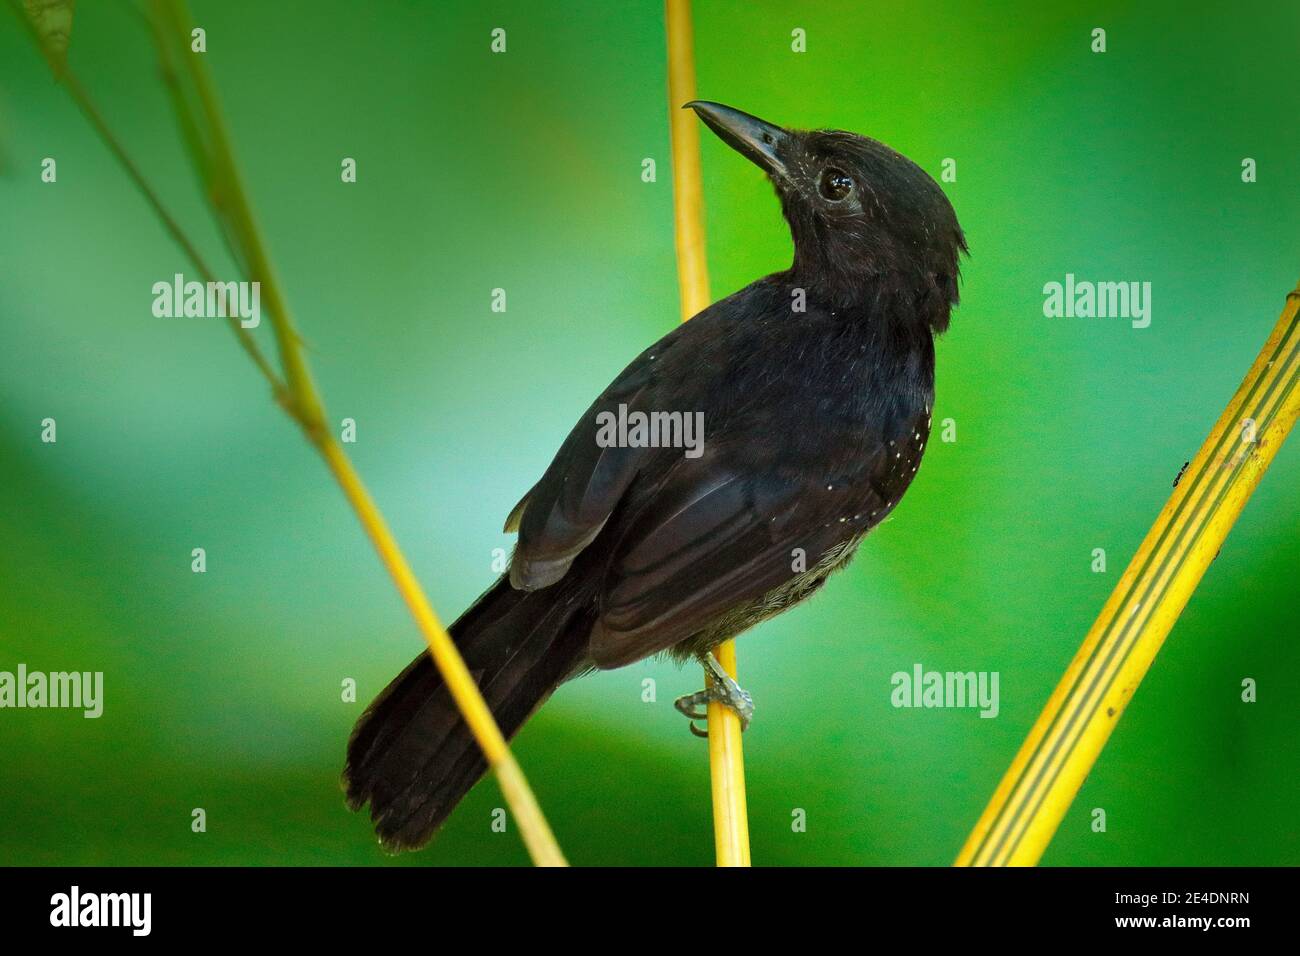 Black-hooded antshrike, Thamnophilus bridgesi, Black bird in green forest tropic vegetation, animal in the habitat, Costa Rica. Antshrike sitting on t Stock Photo